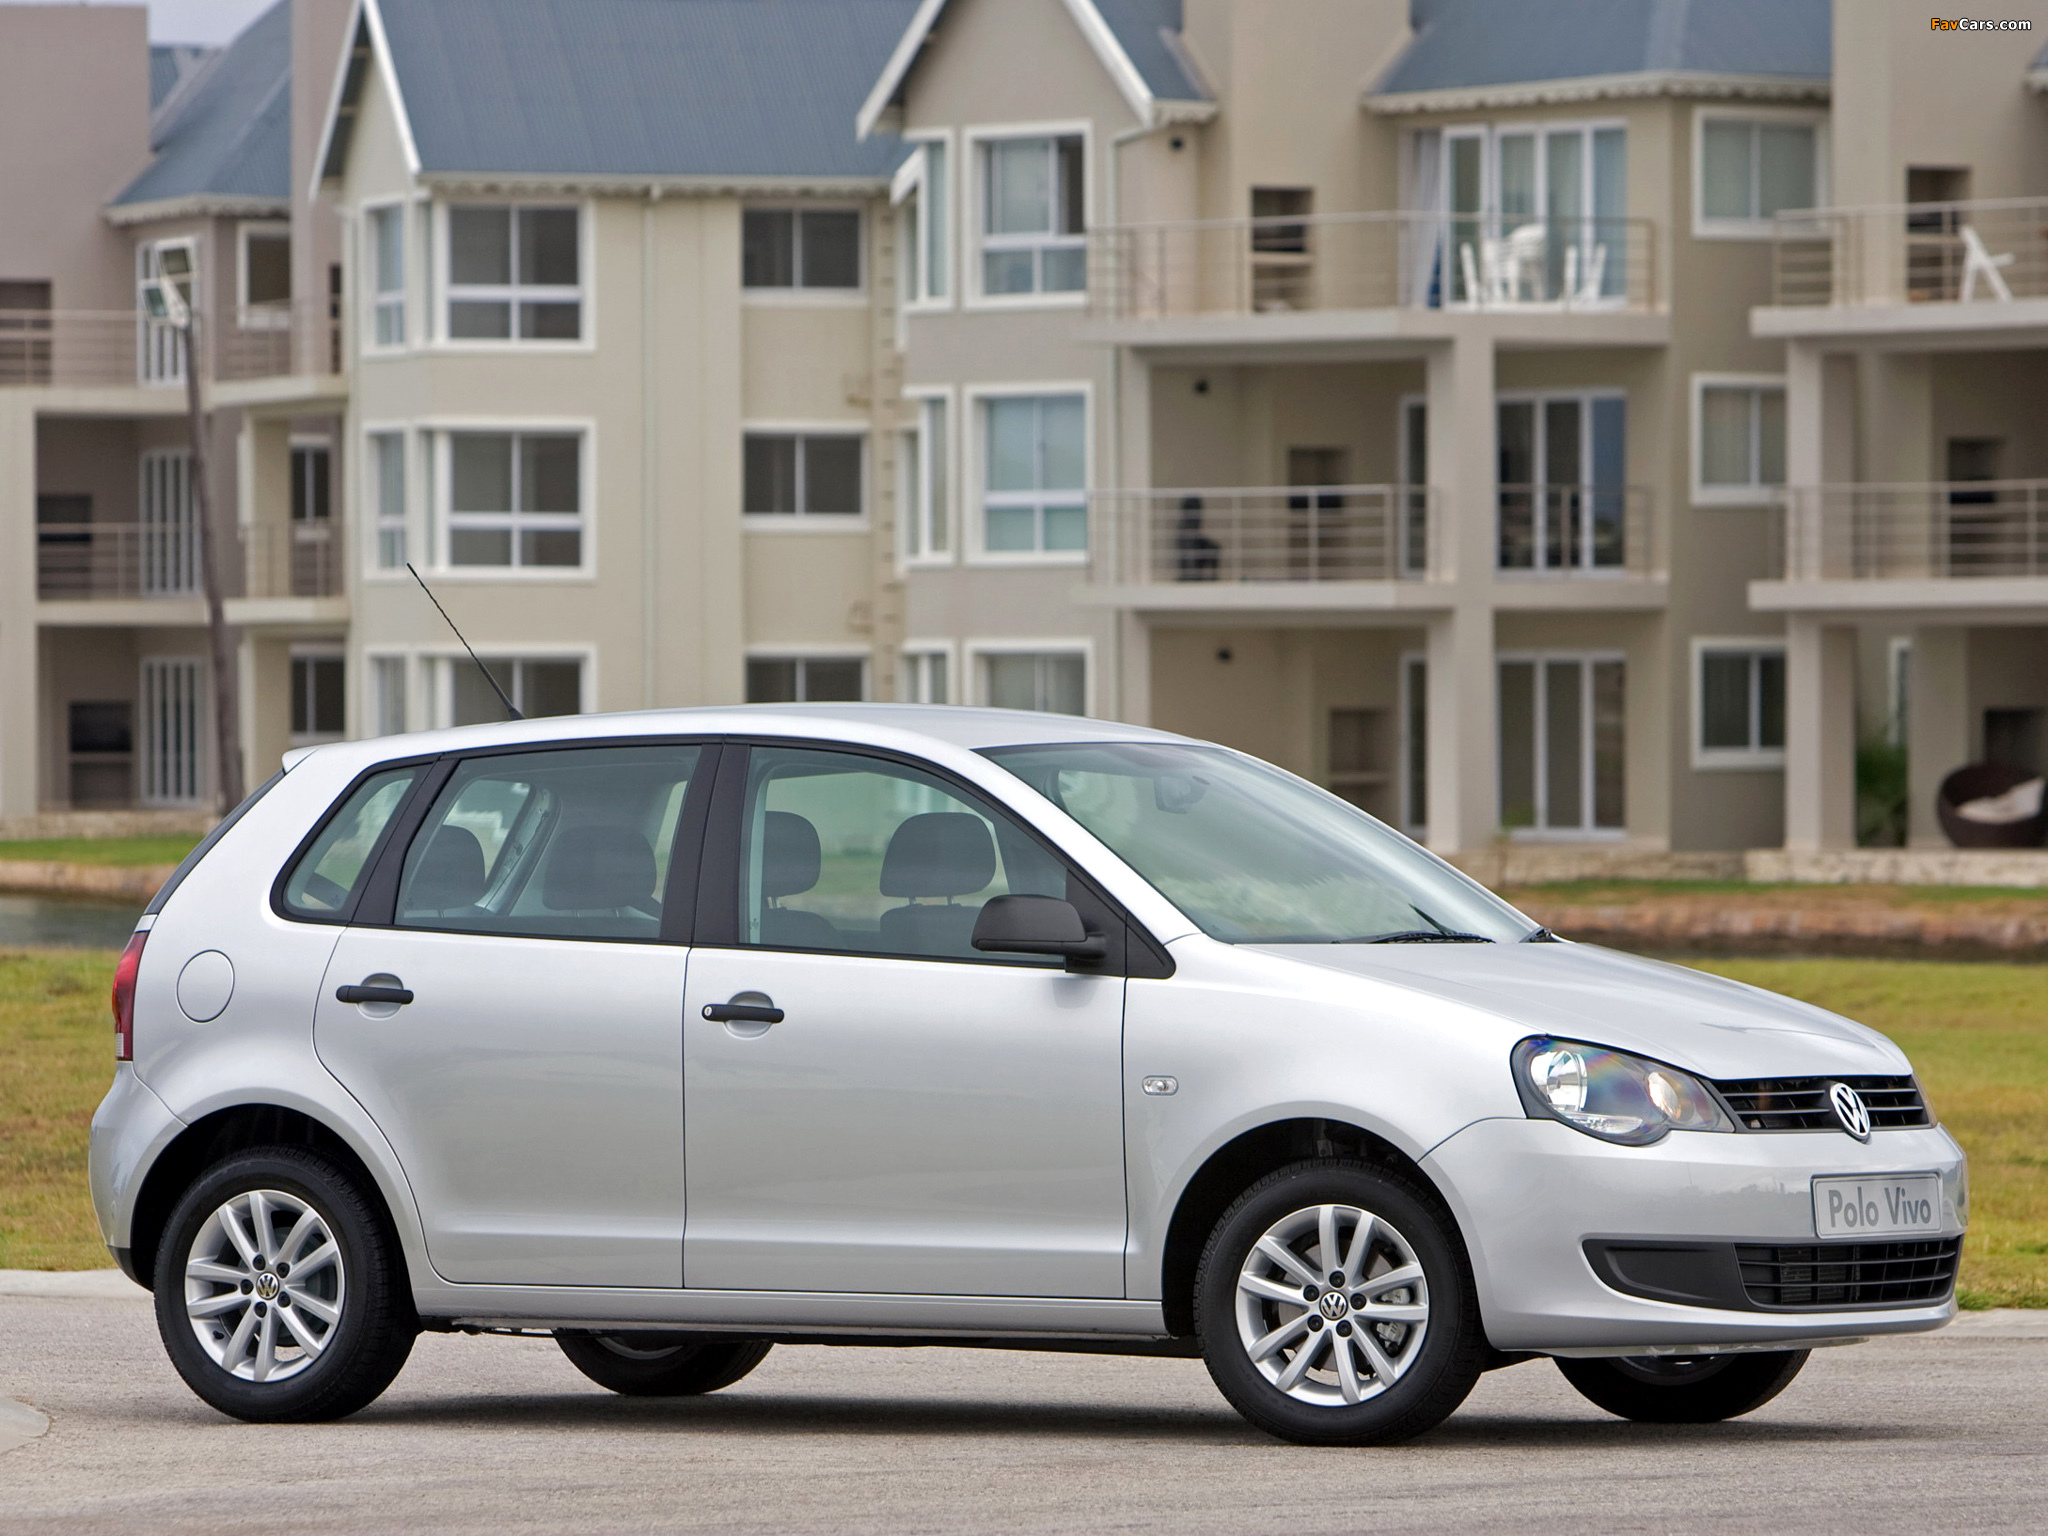 Volkswagen Polo Vivo Hatchback (IVf) 2010 pictures (2048 x 1536)